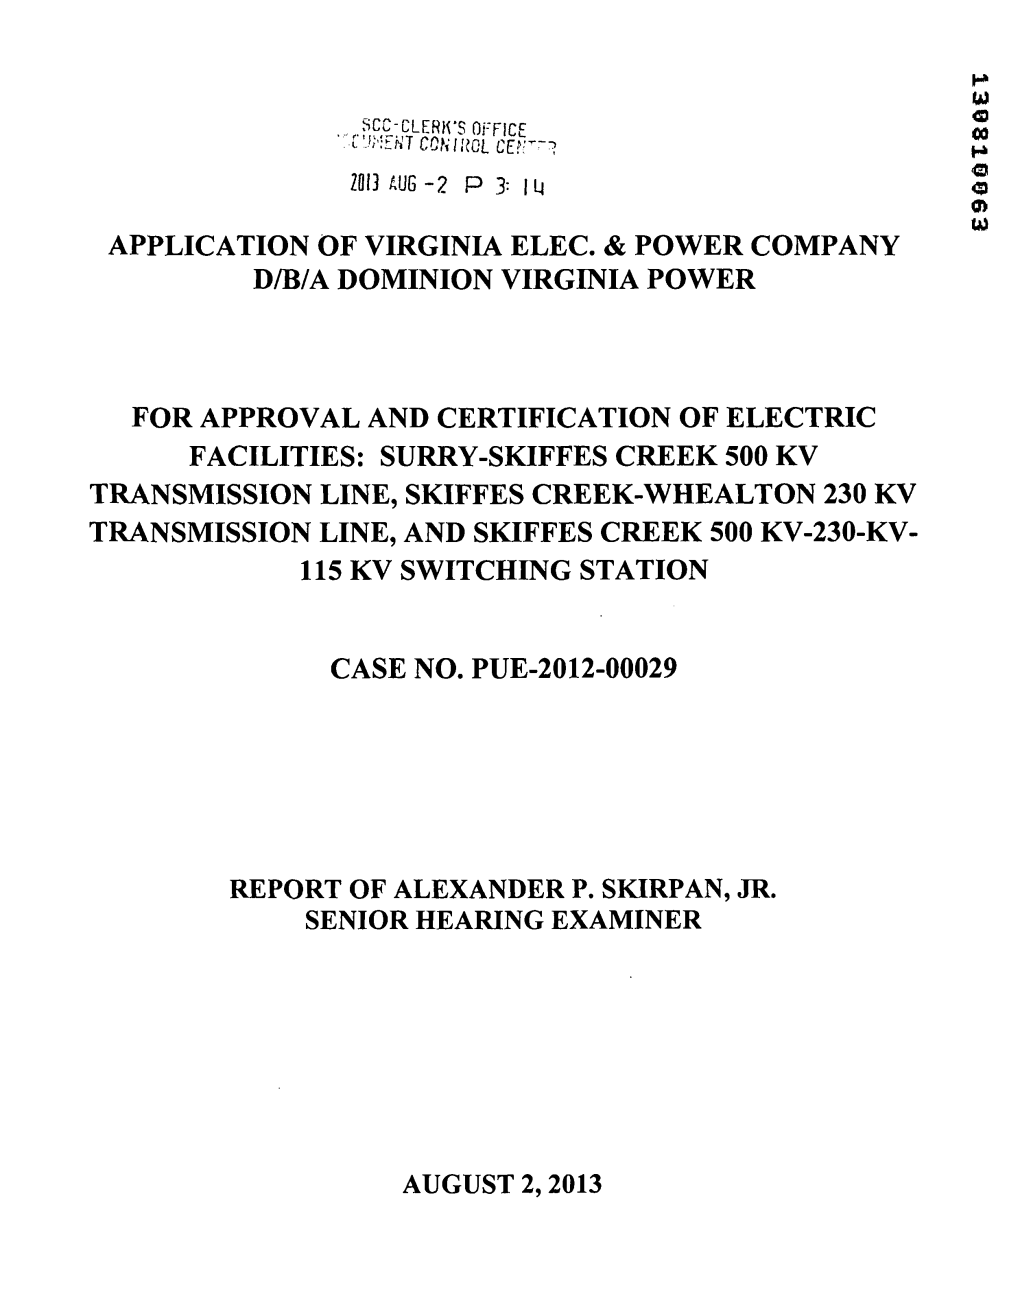 Application of Virginia Elec. & Power Company D/B/A